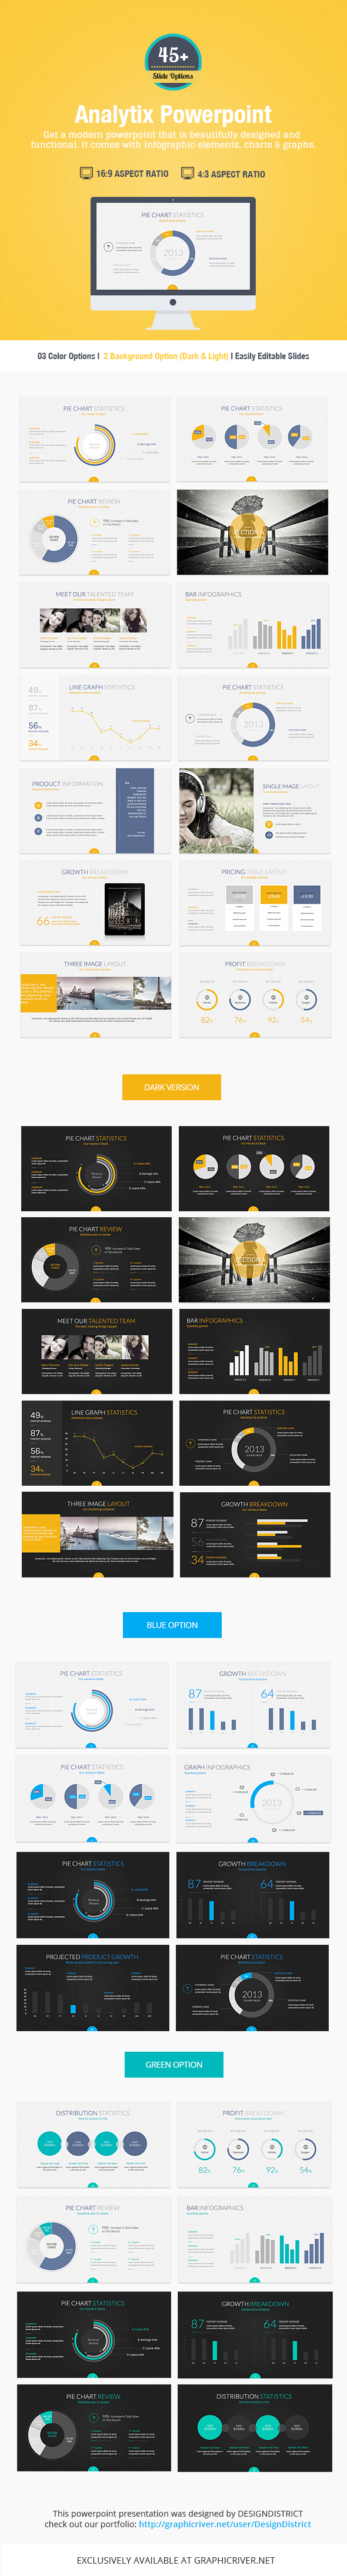 Powerpoint presentation slides deck analytics infographic Proposal pitch business corporate